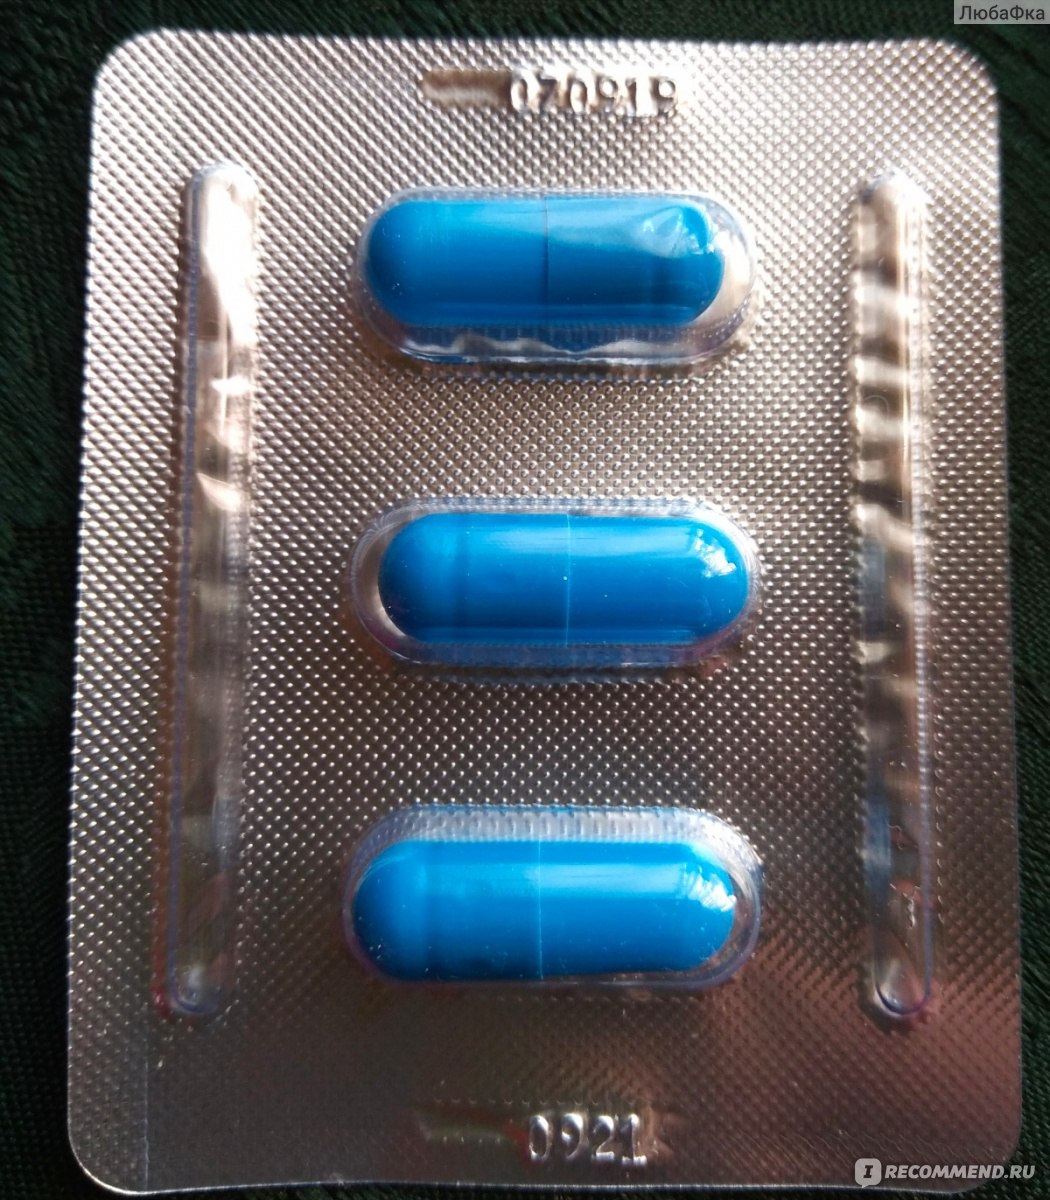 Три антибиотика. Антибиотик 3 таблетки. Антибиотик с одной капсулой. Антибиотики синие капсулы. Антибиотик три капсулы.